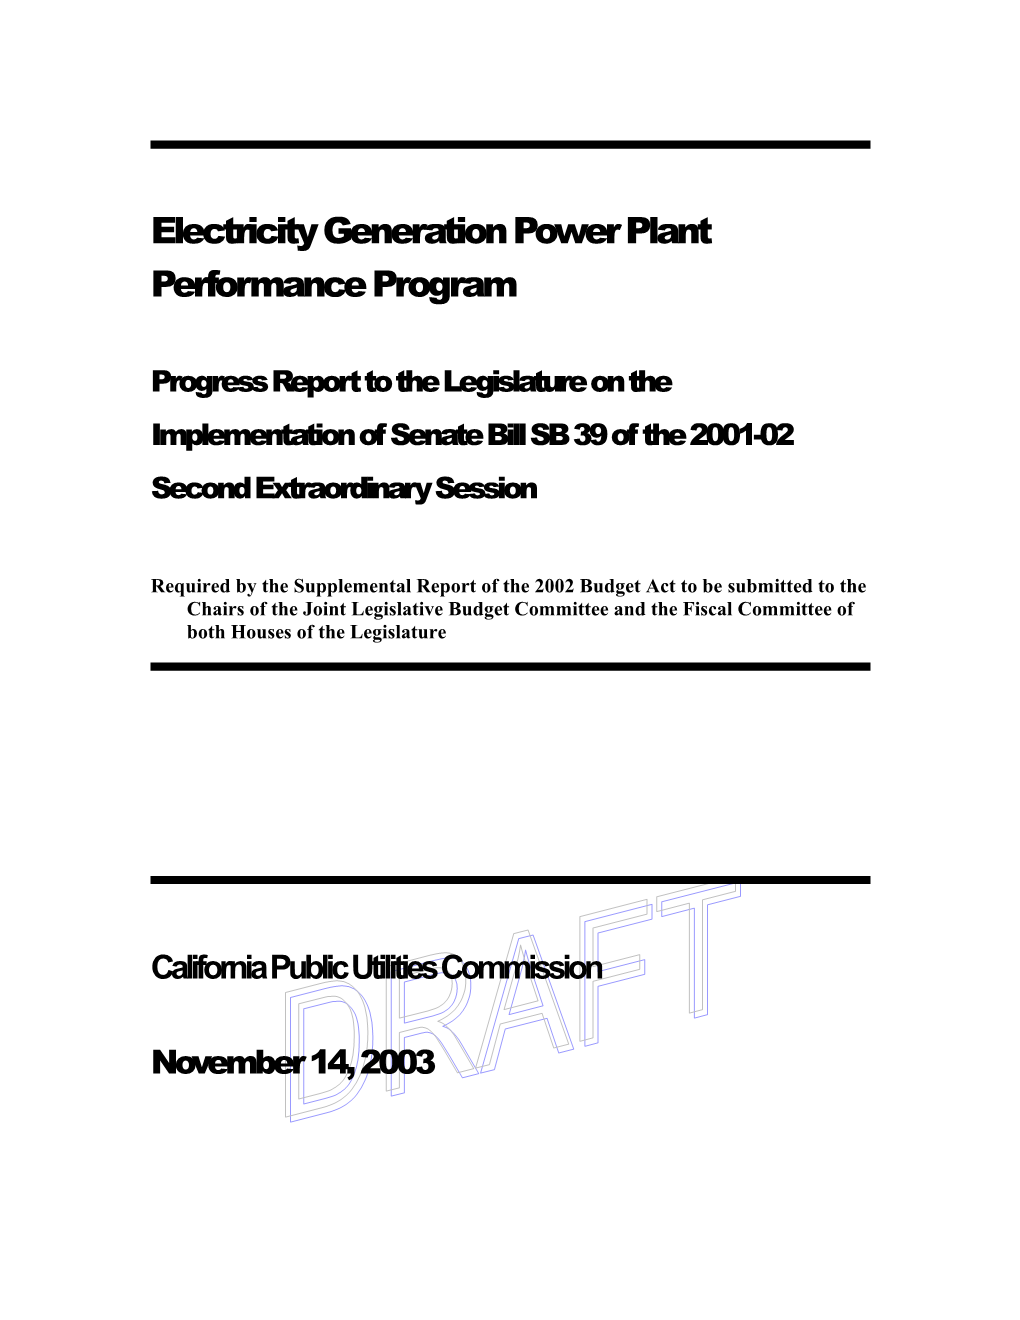 Electricity Generation Power Plant Performance Program